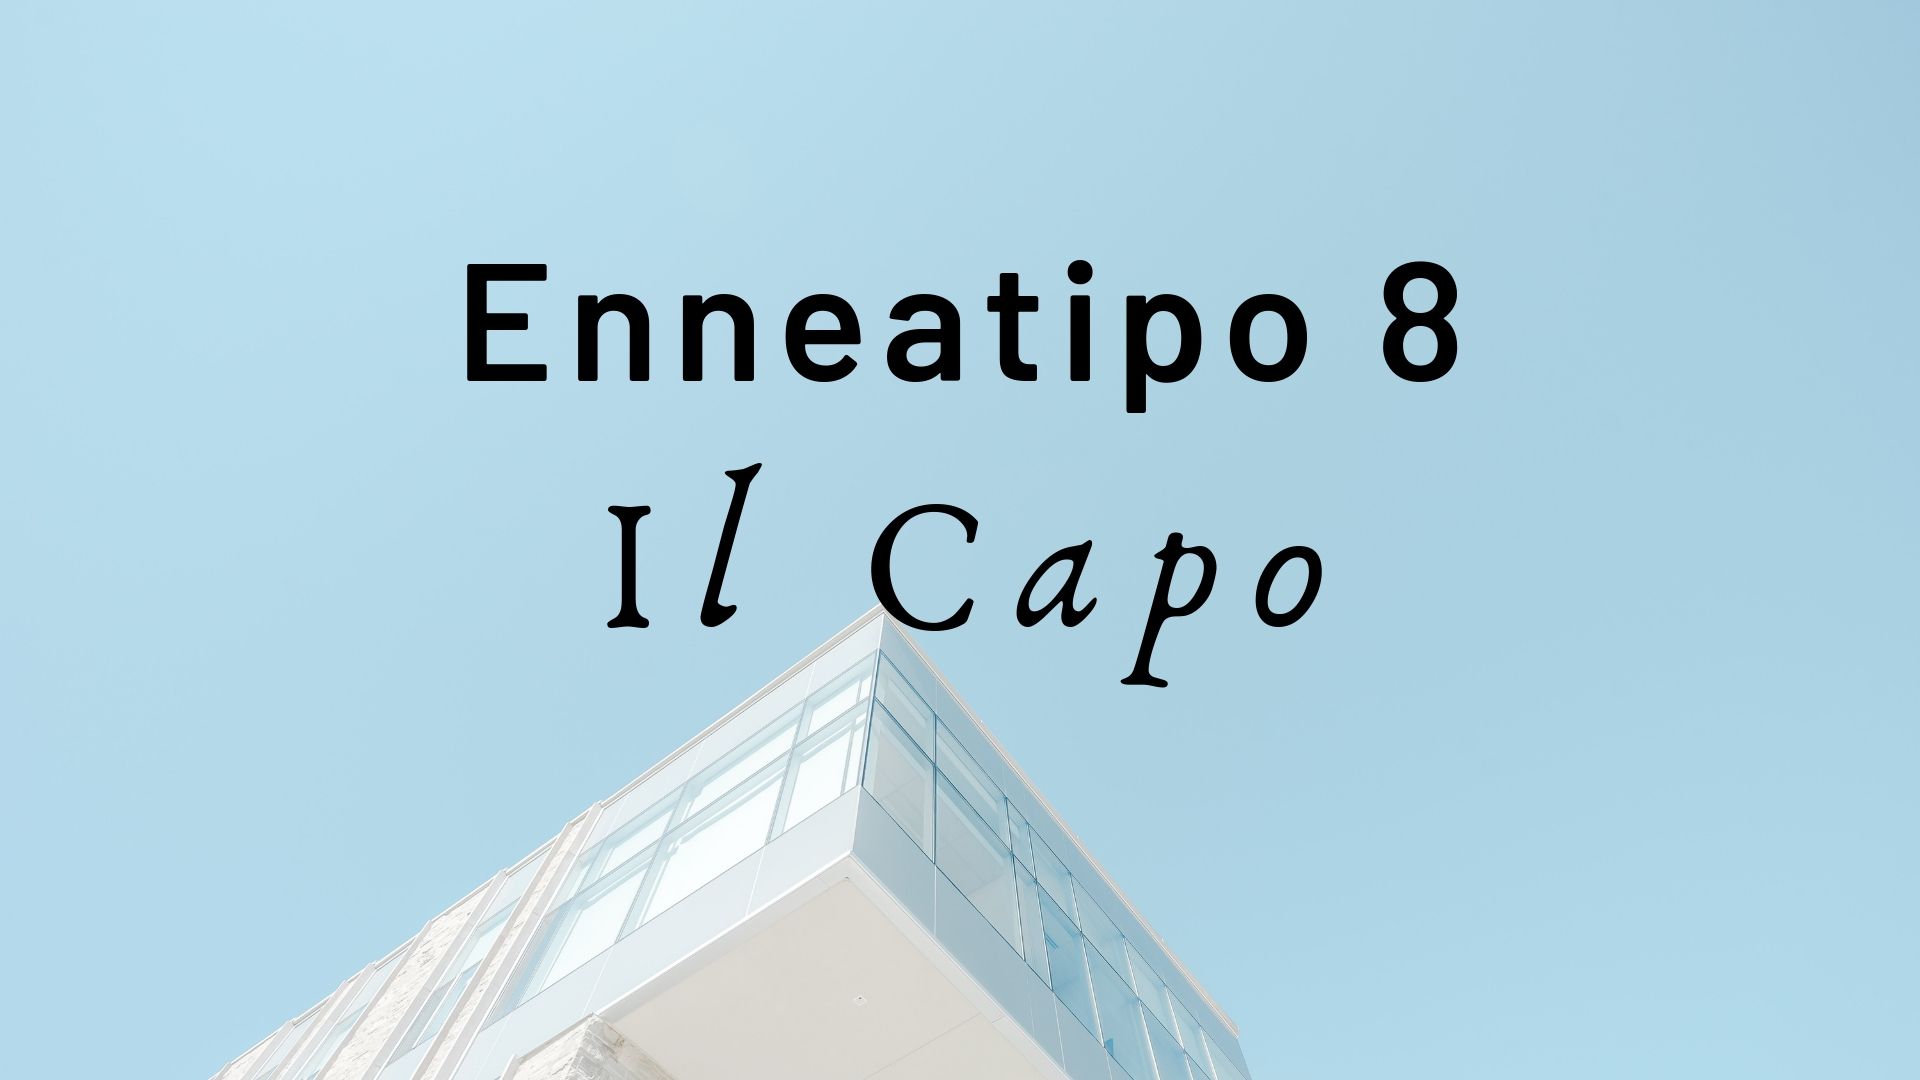 Enneatipo 8